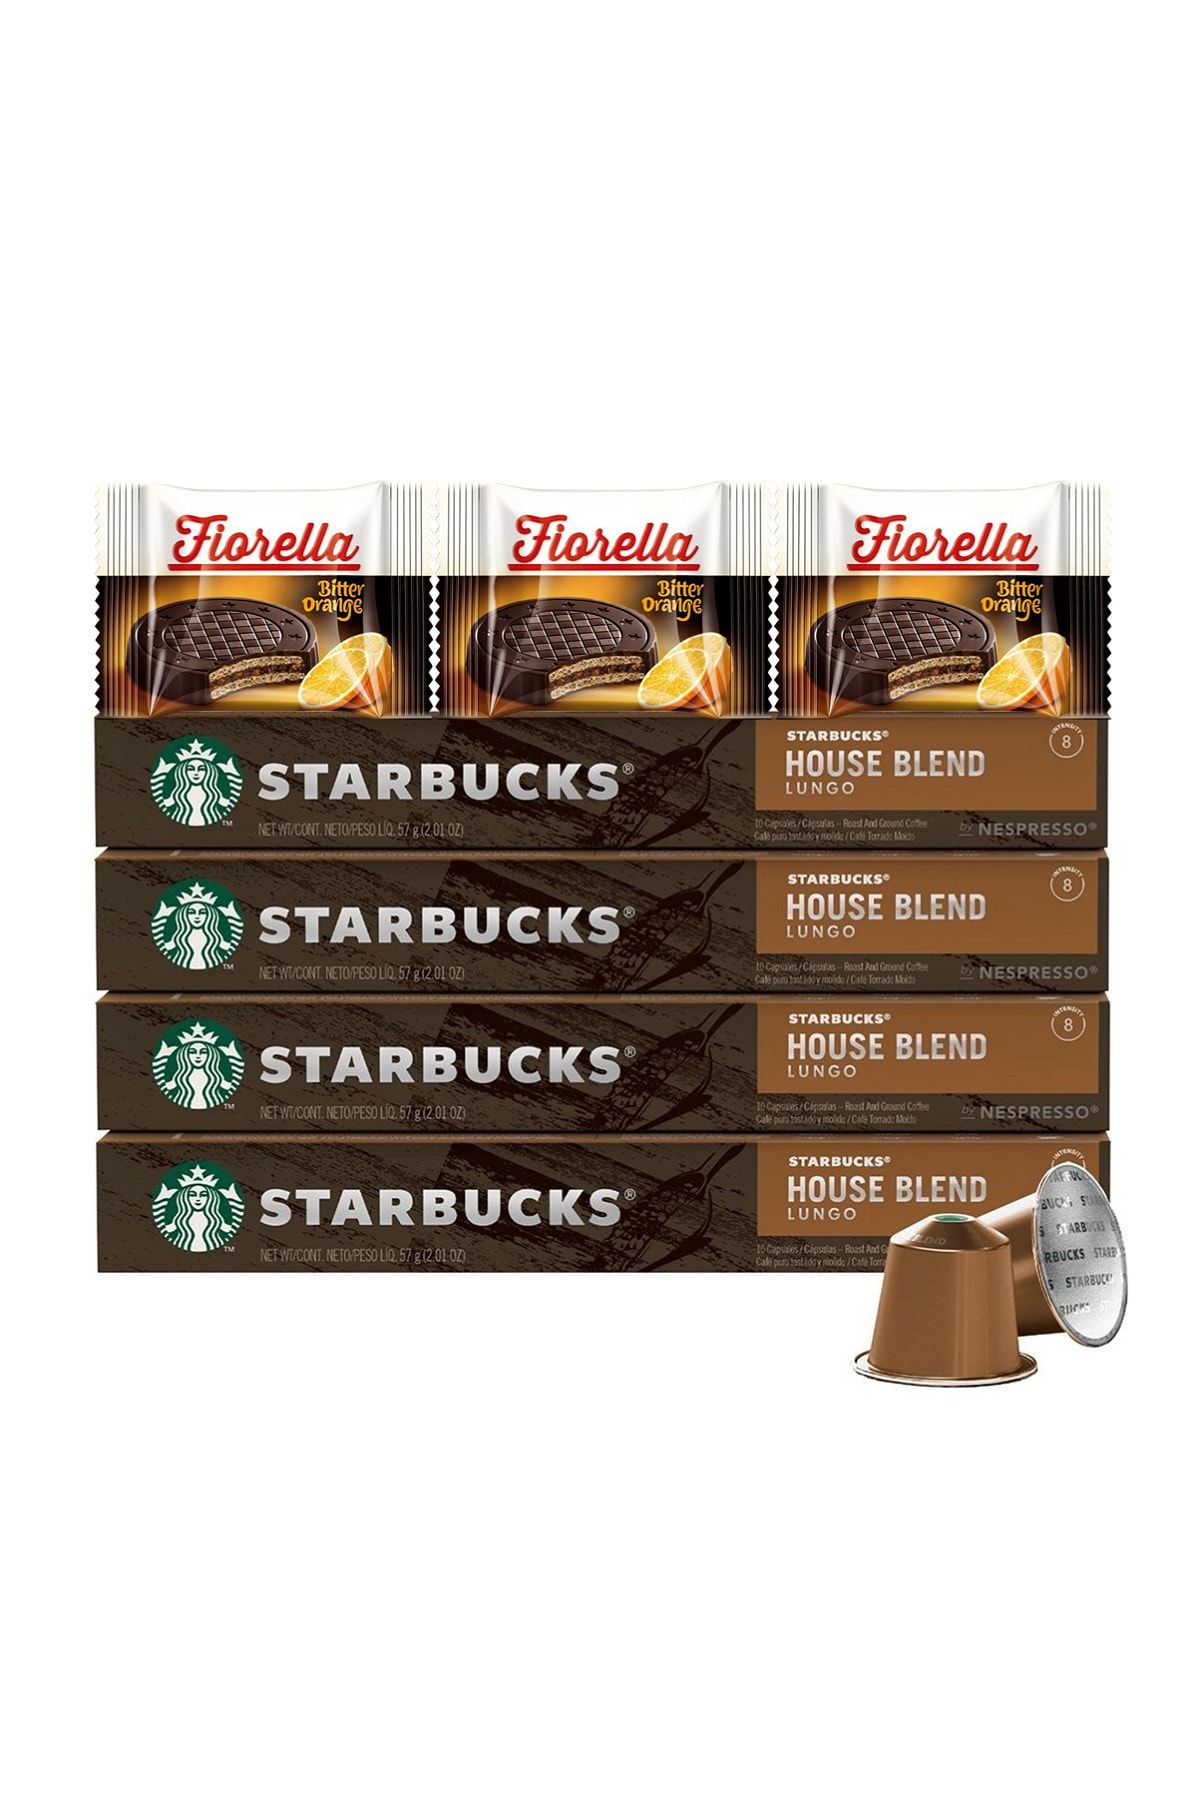 Starbucks 4 Adet 10'lu House Blend Lungo Kapsül Kahve Seti + Fiorella 3x